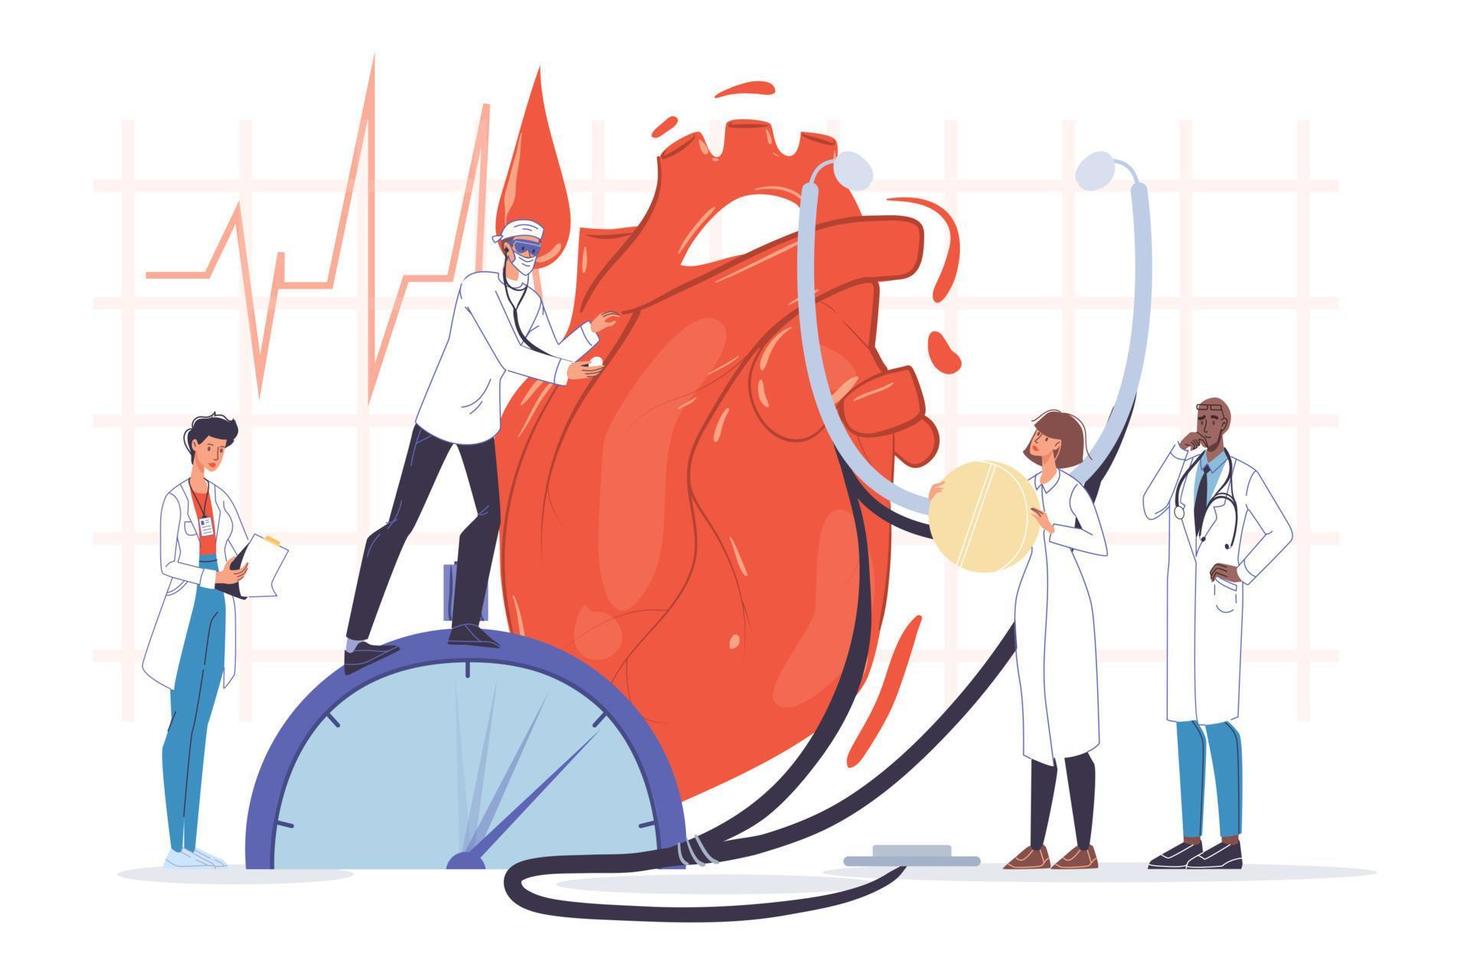 médico cardiólogo equipo corazón humano examen vector